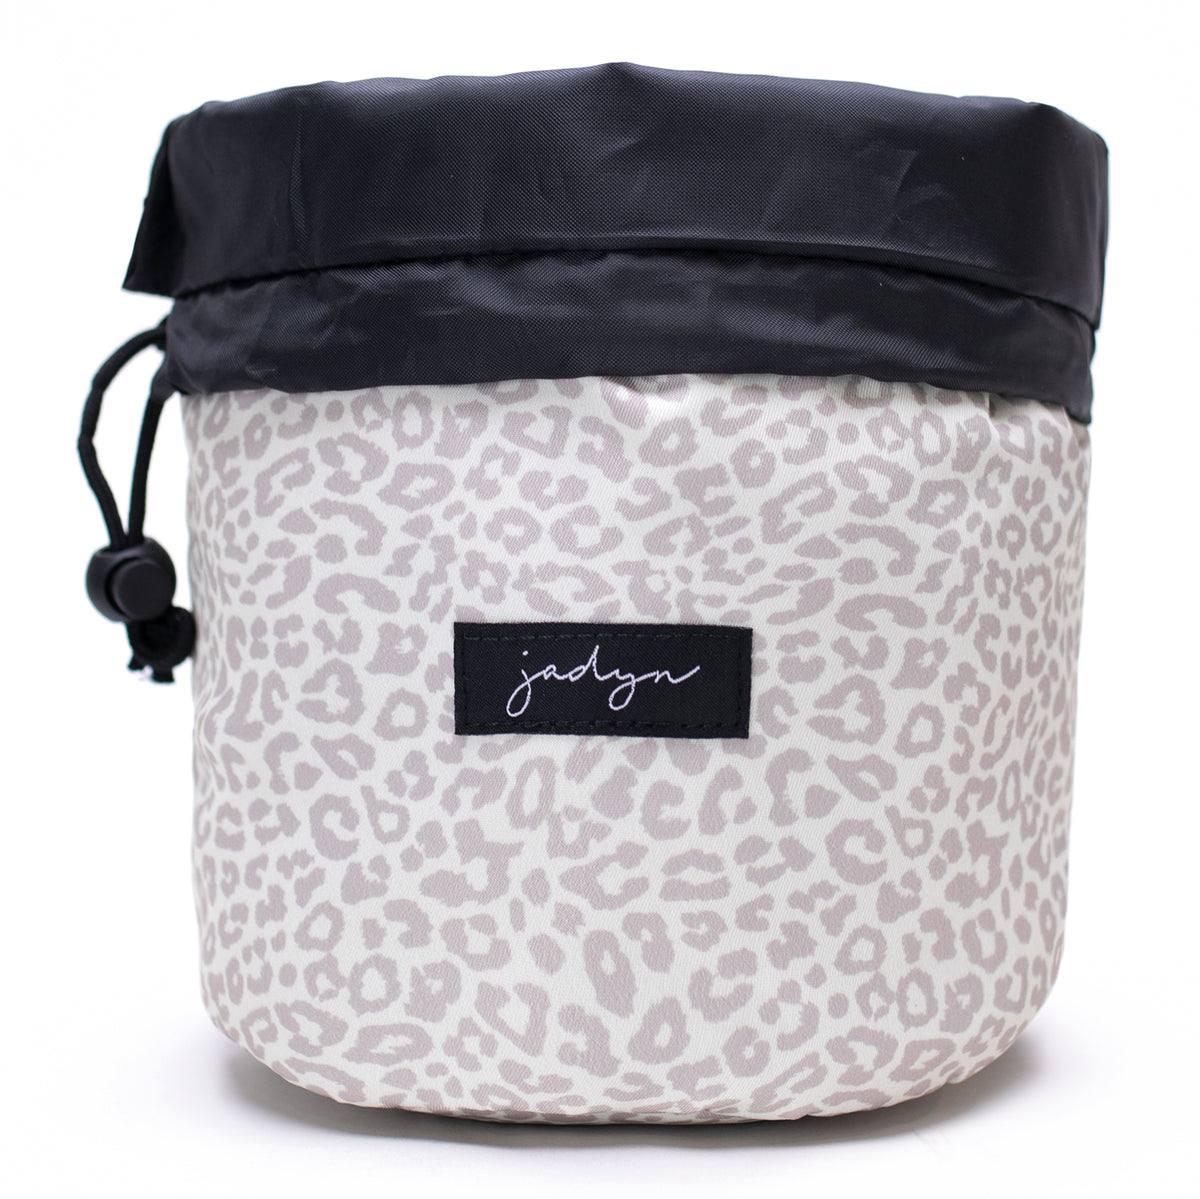  Cosmetic Bag Makeup toiletry Bag Leopard Print Travel